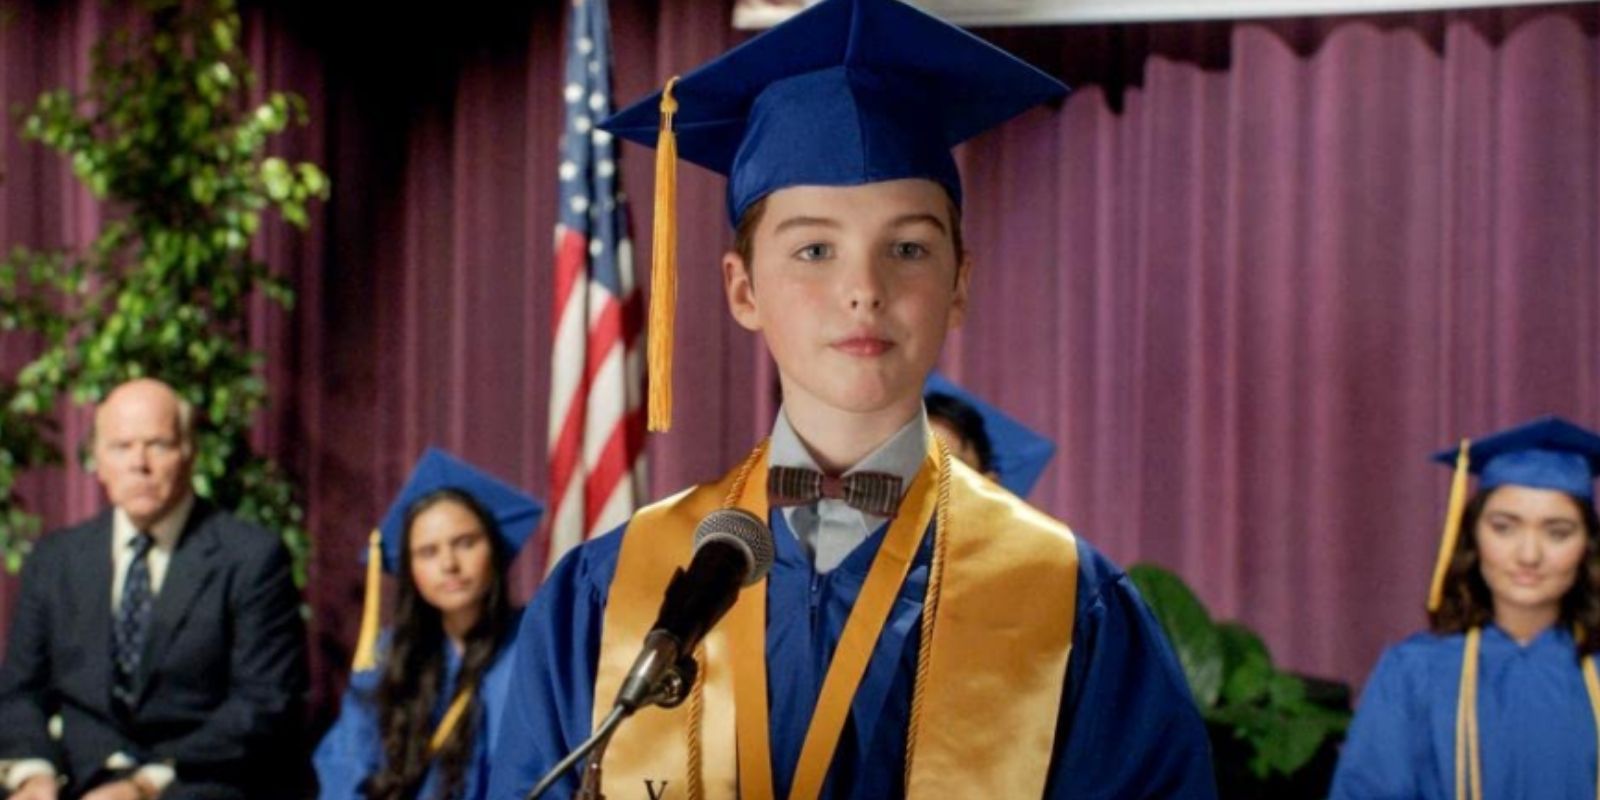 Graduation Episode of Young Sheldon